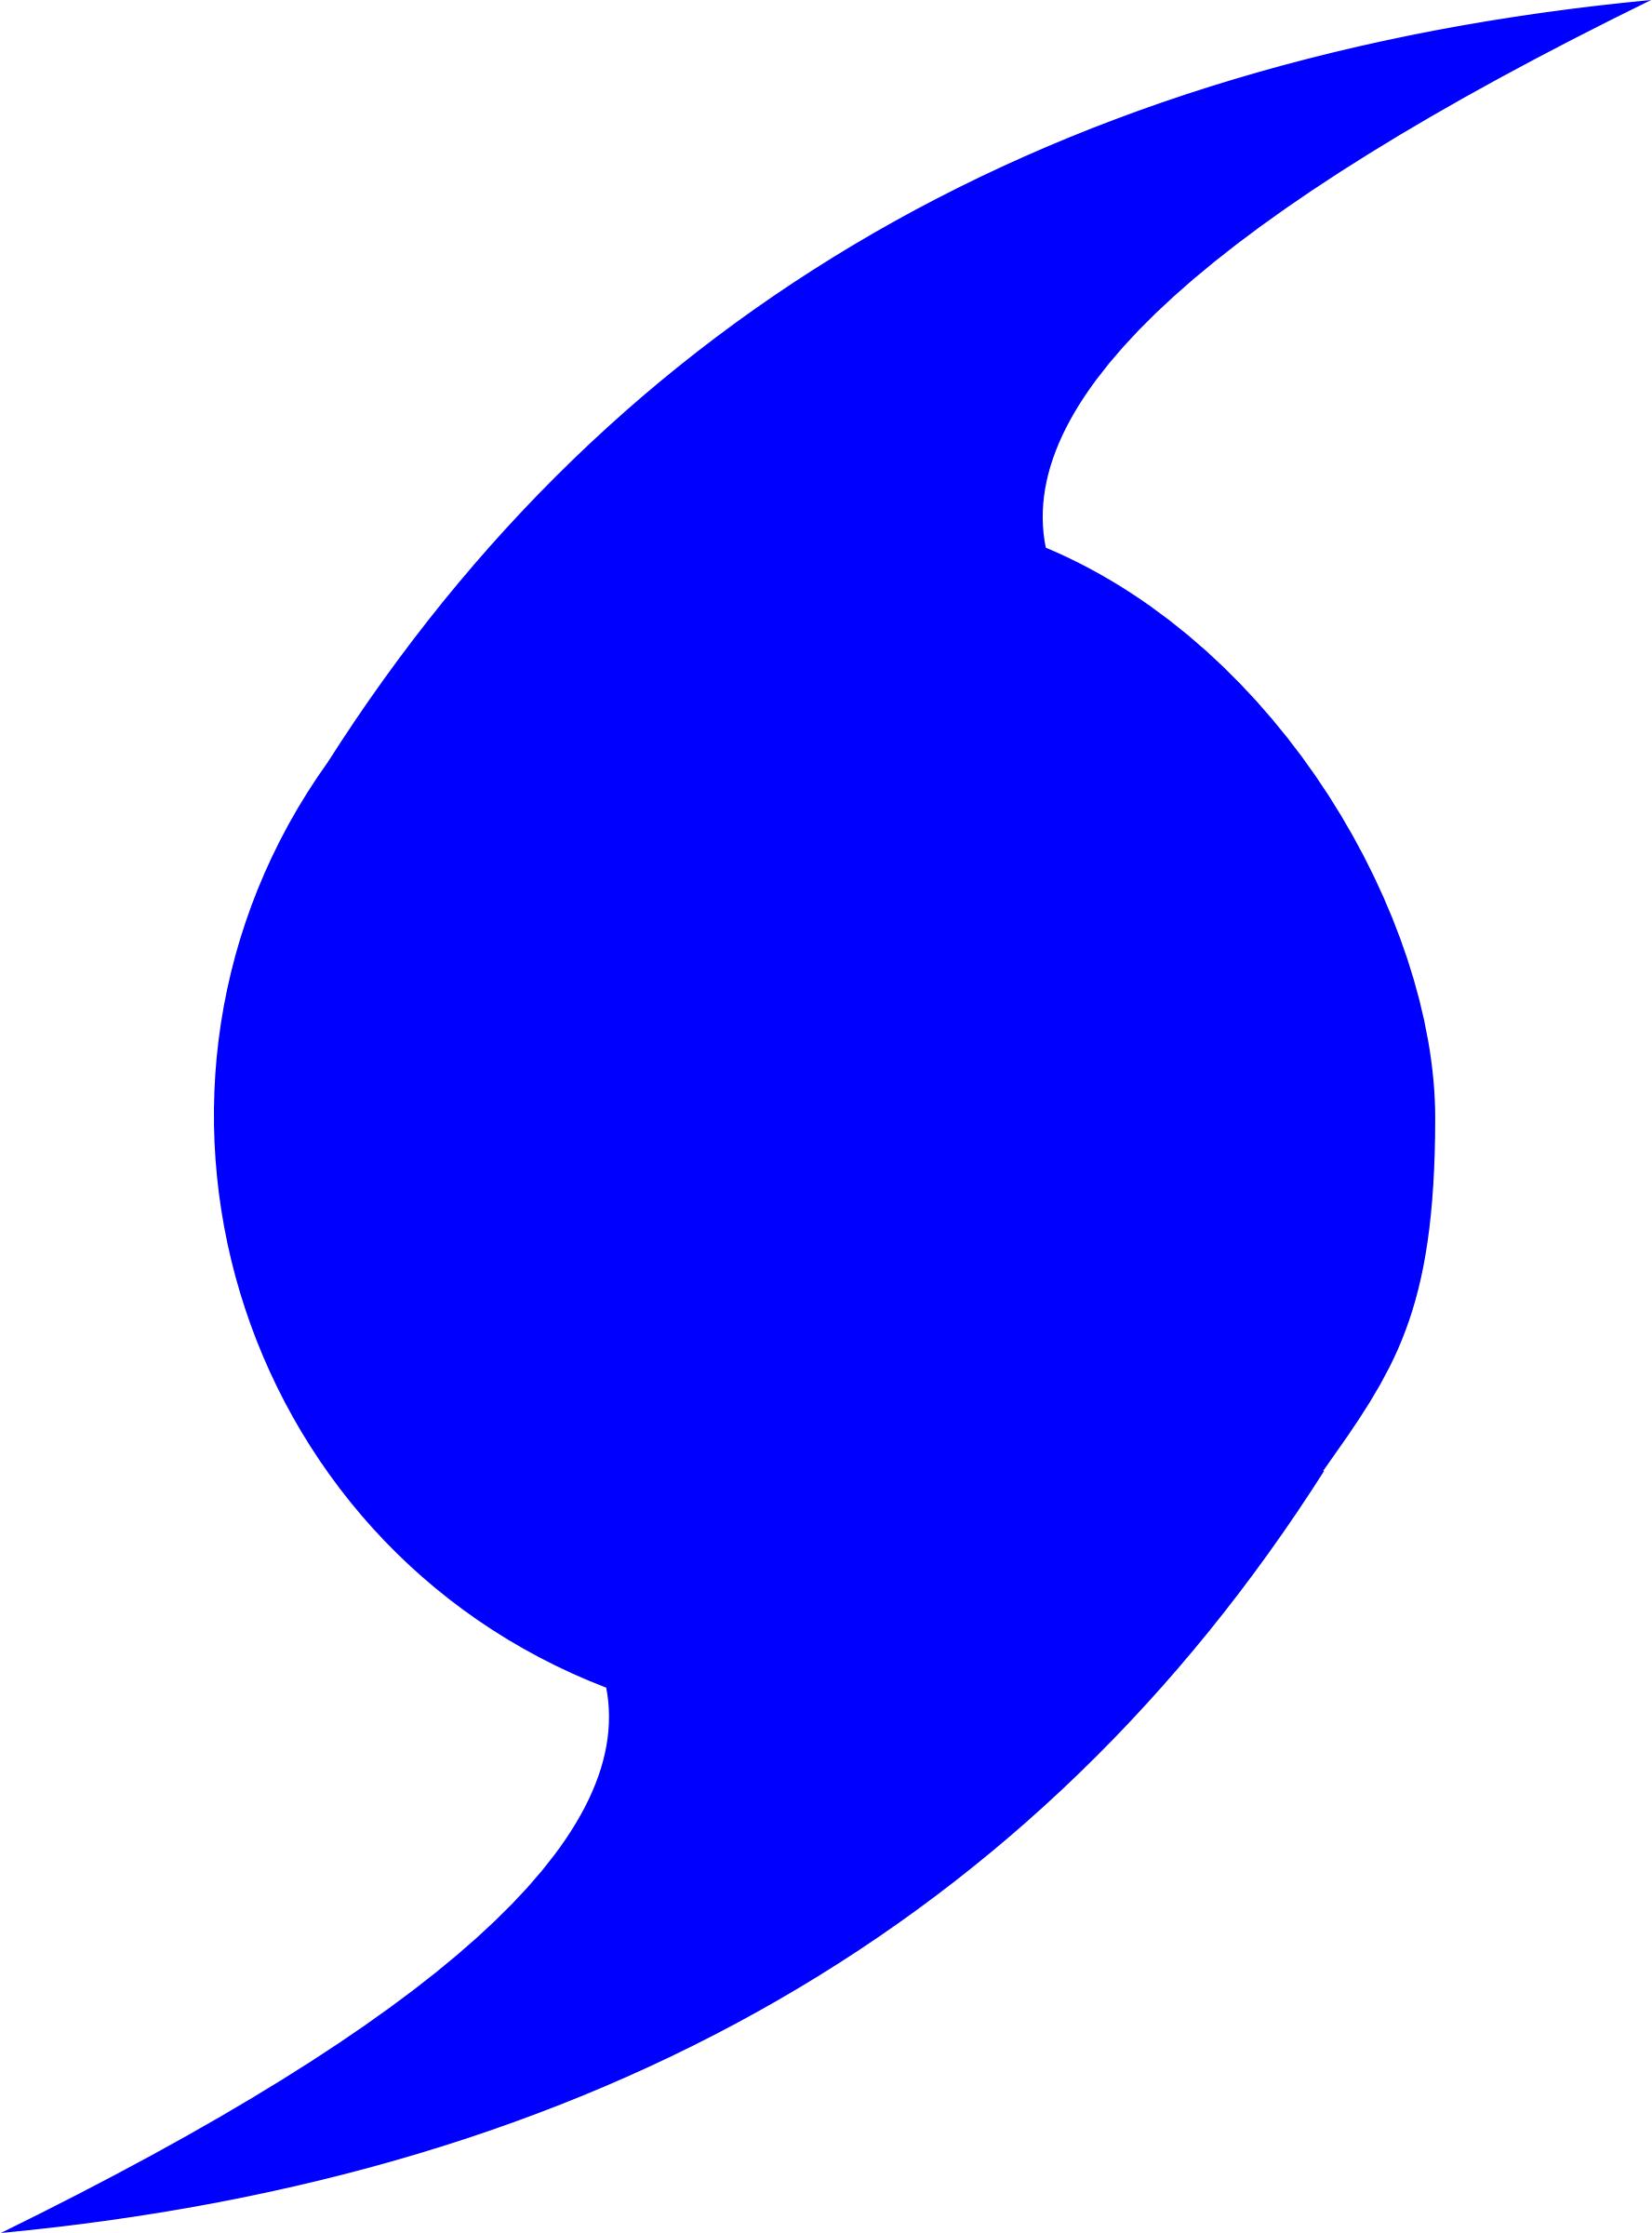 A Blue And Black Symbol